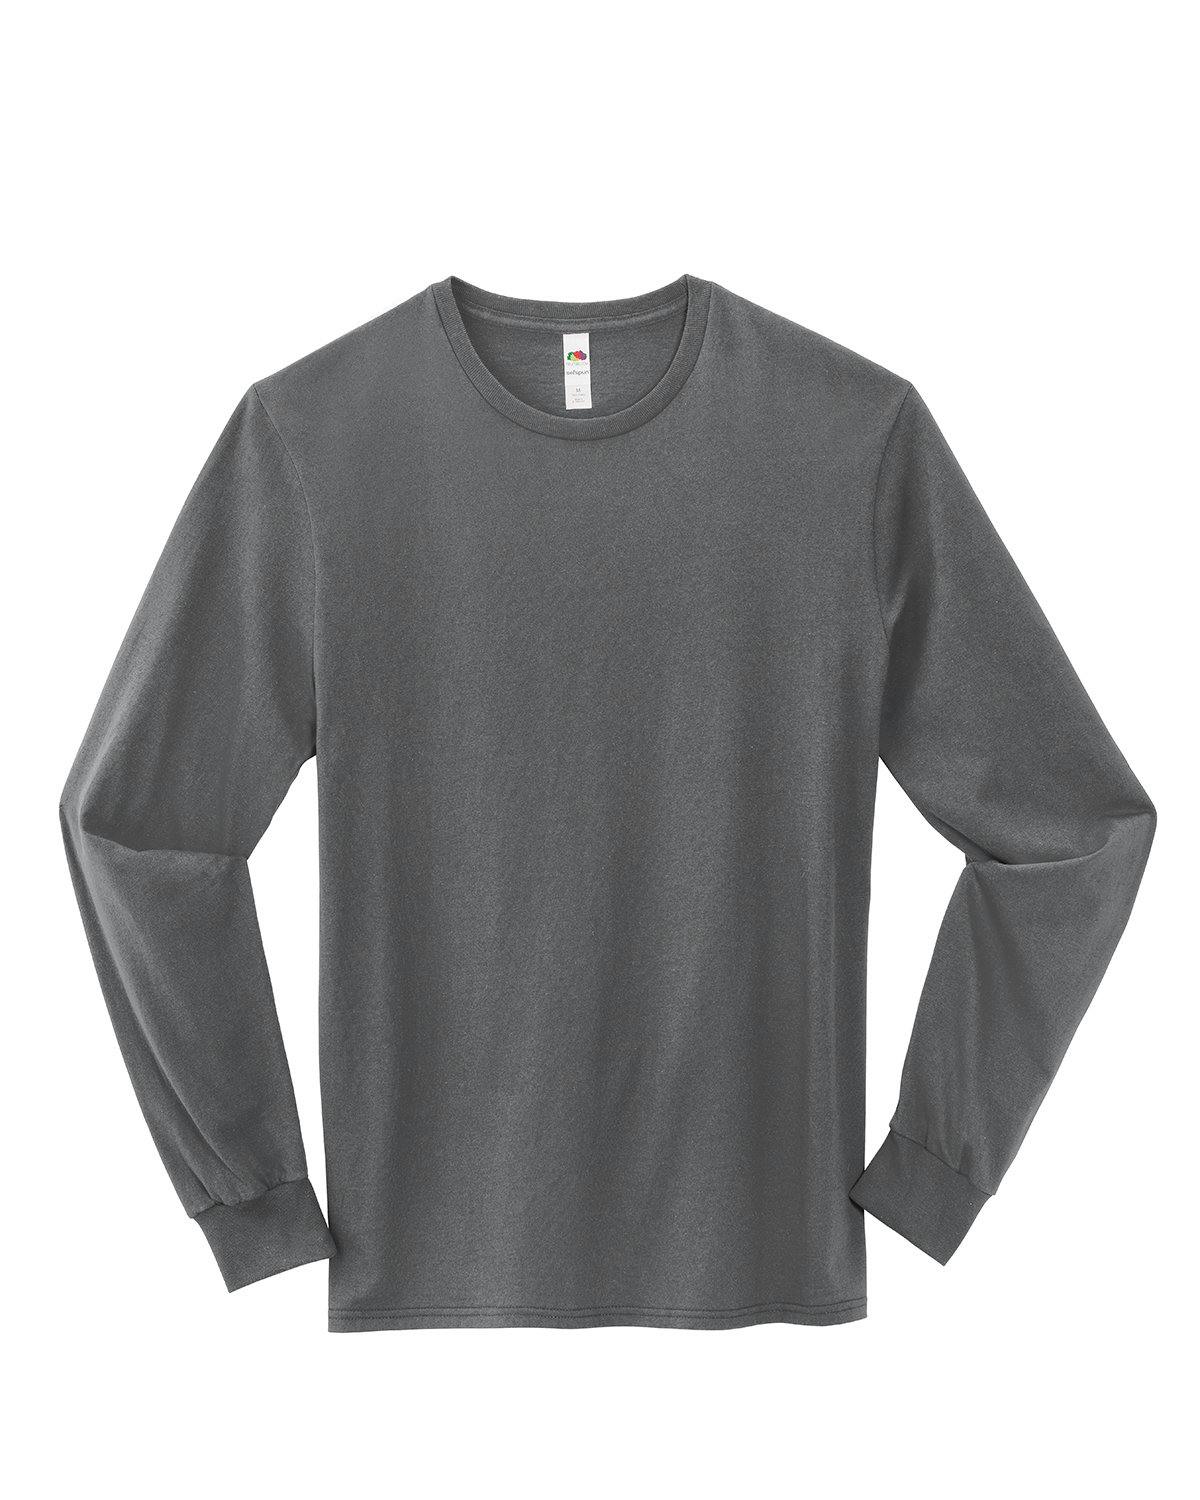 Image for Adult Sofspun® Jersey Long-Sleeve T-Shirt